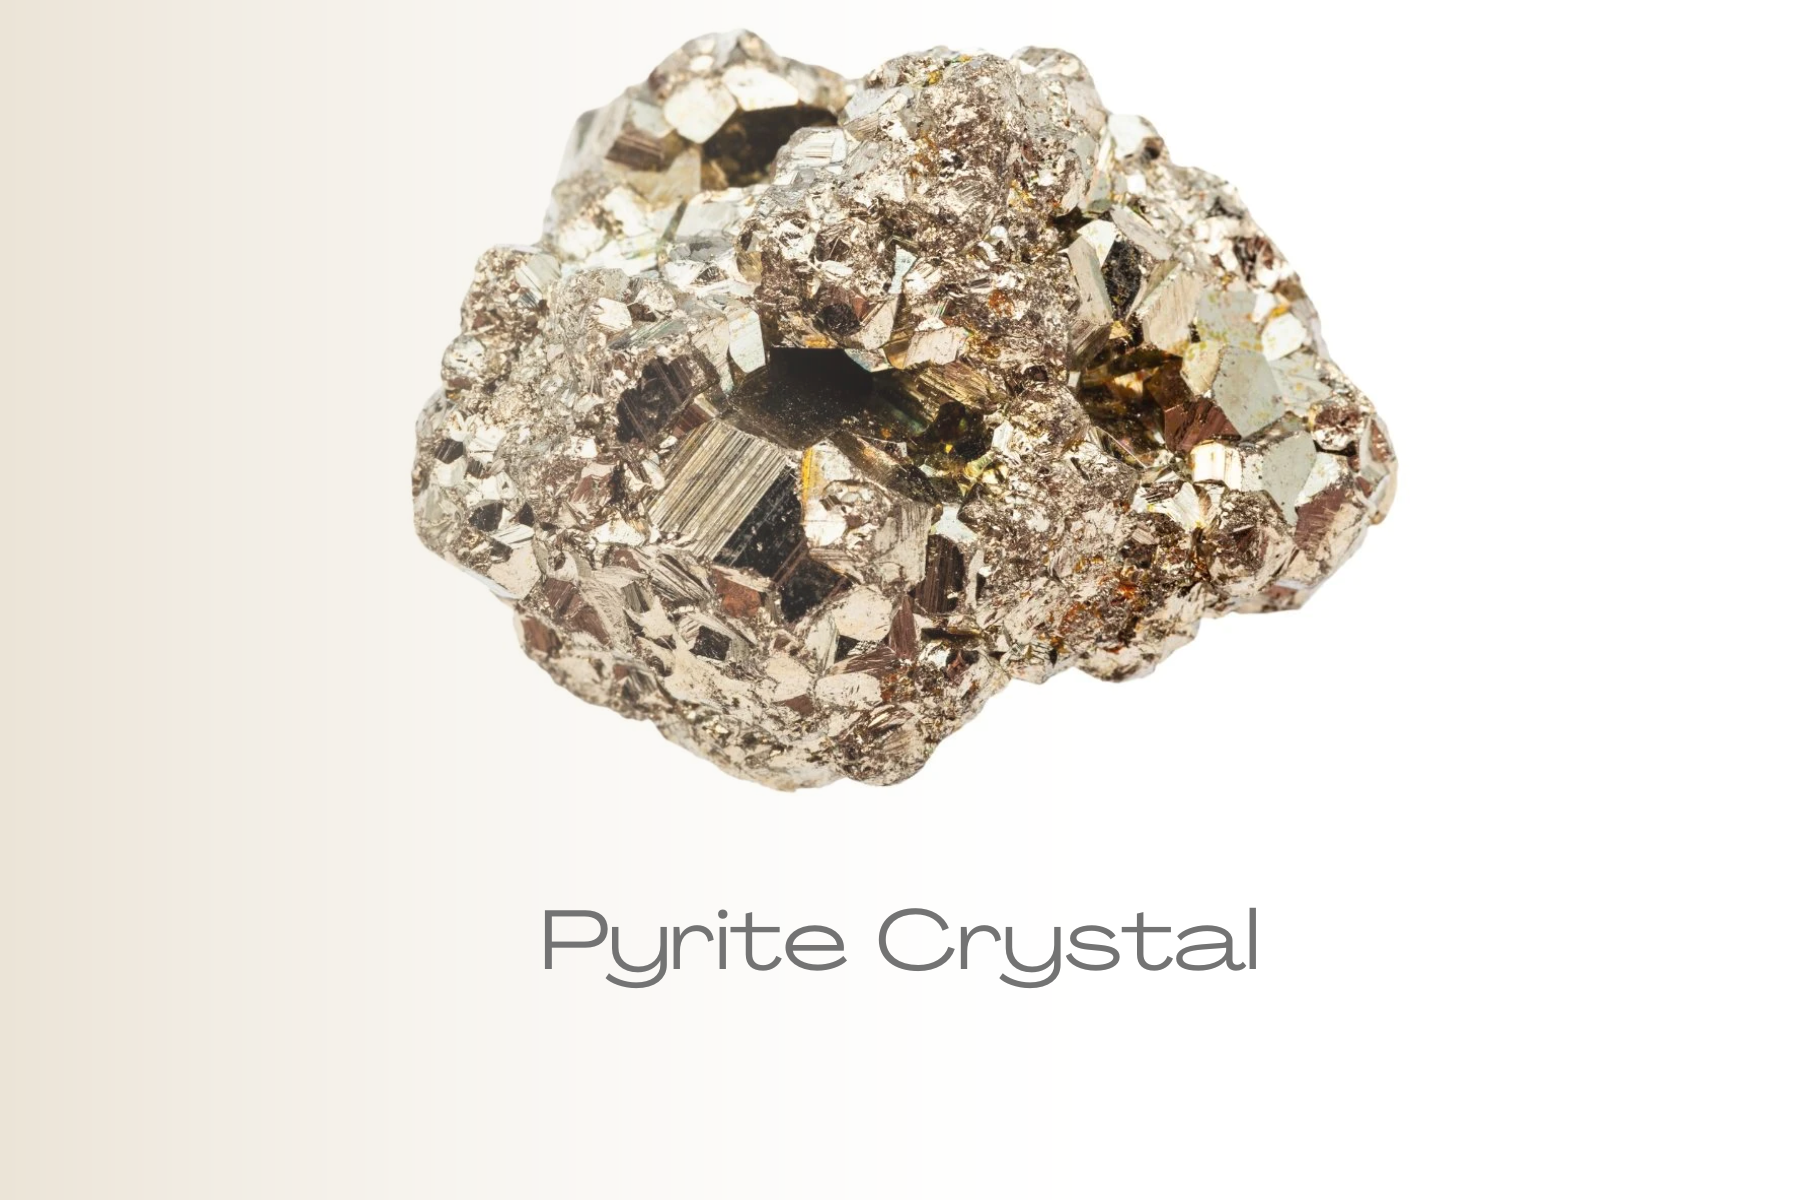 Rock-formed pyrite crystal